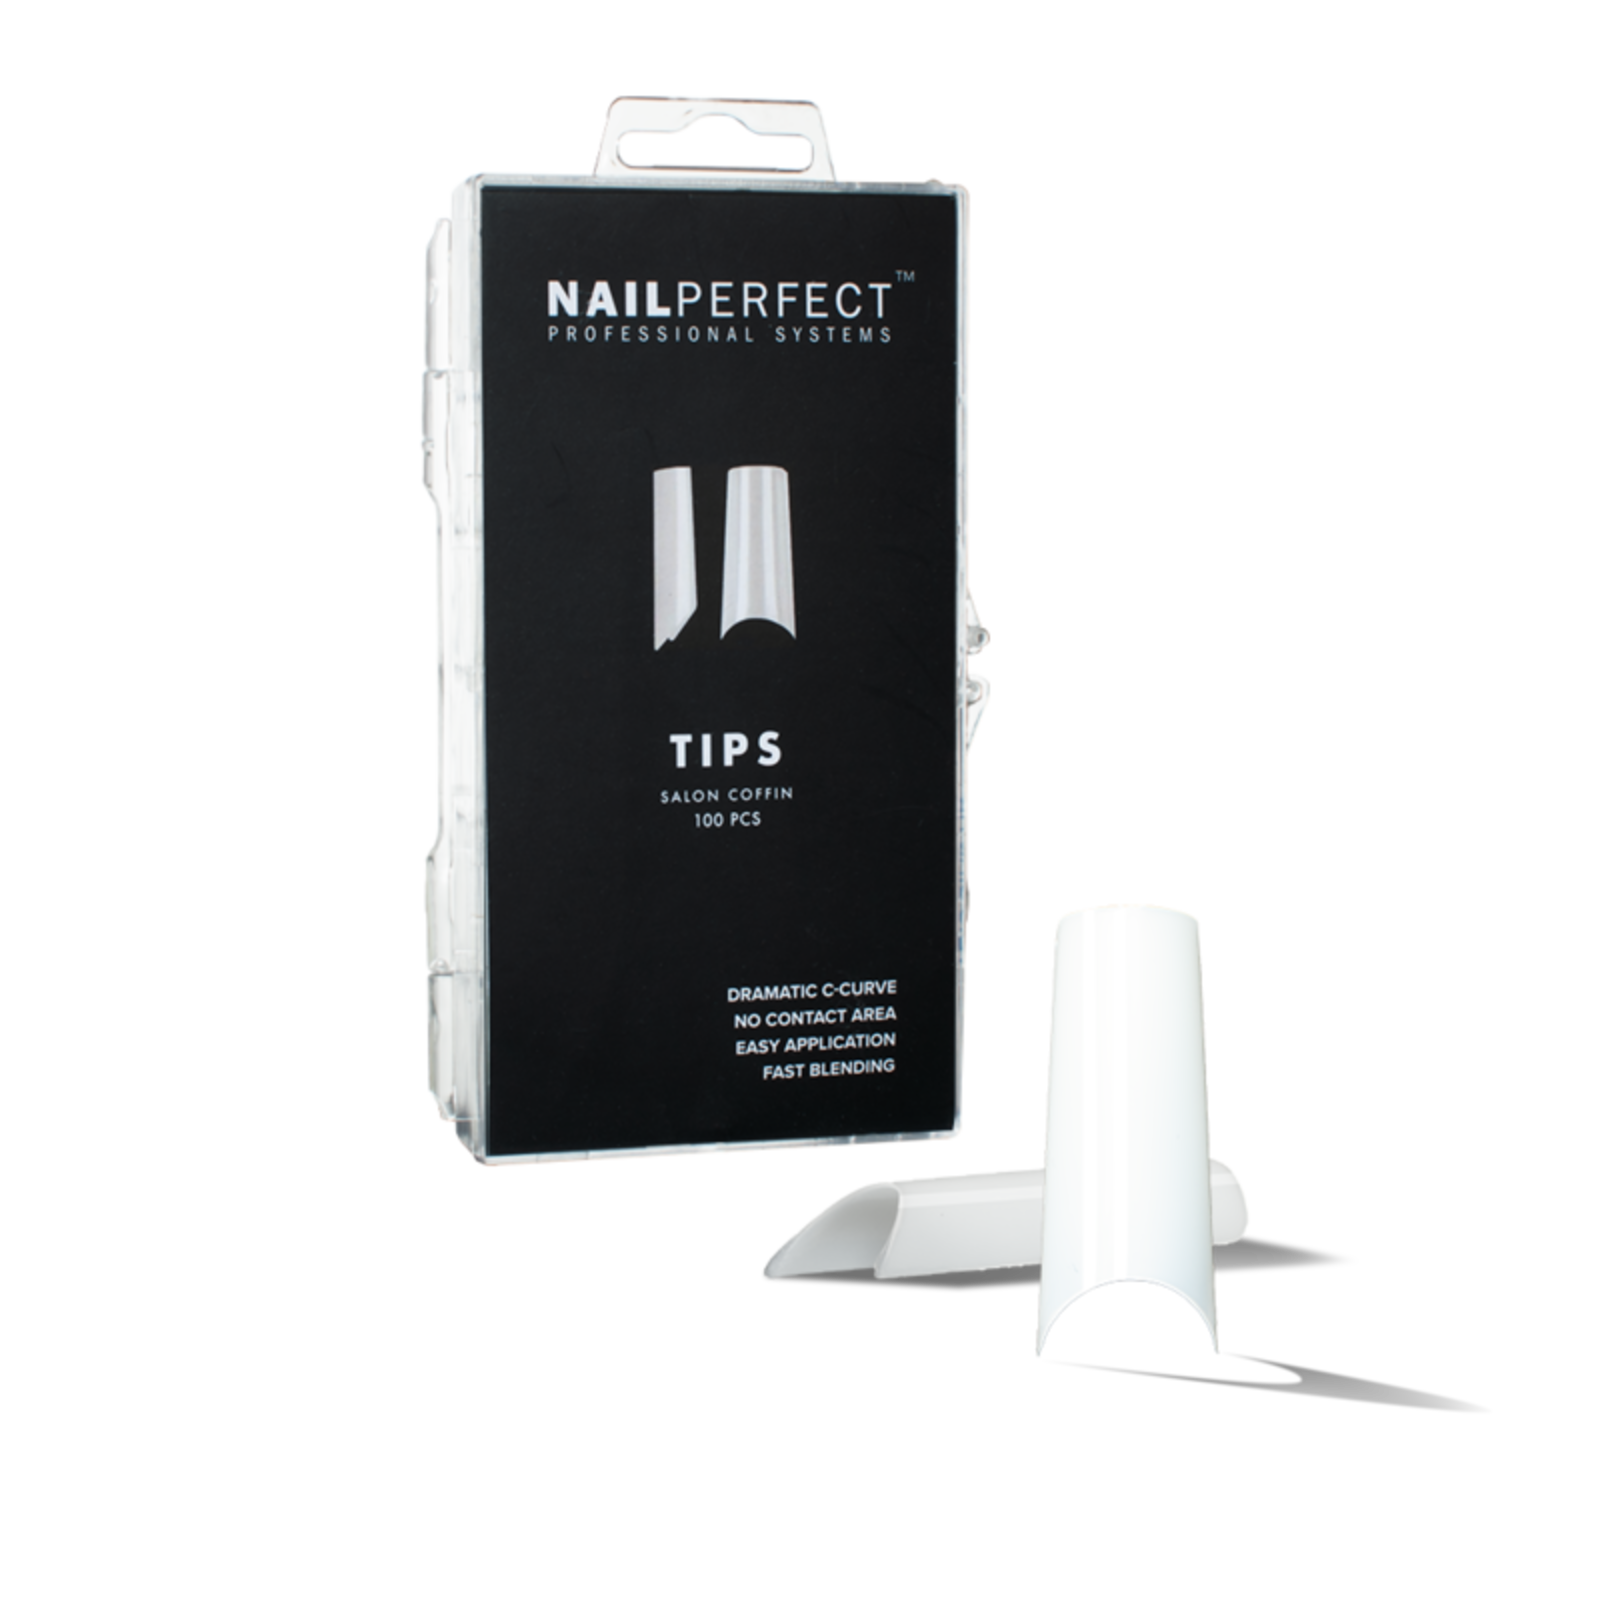 NailPerfect Nail Perfect Salon Coffin Tips 100 Stuks